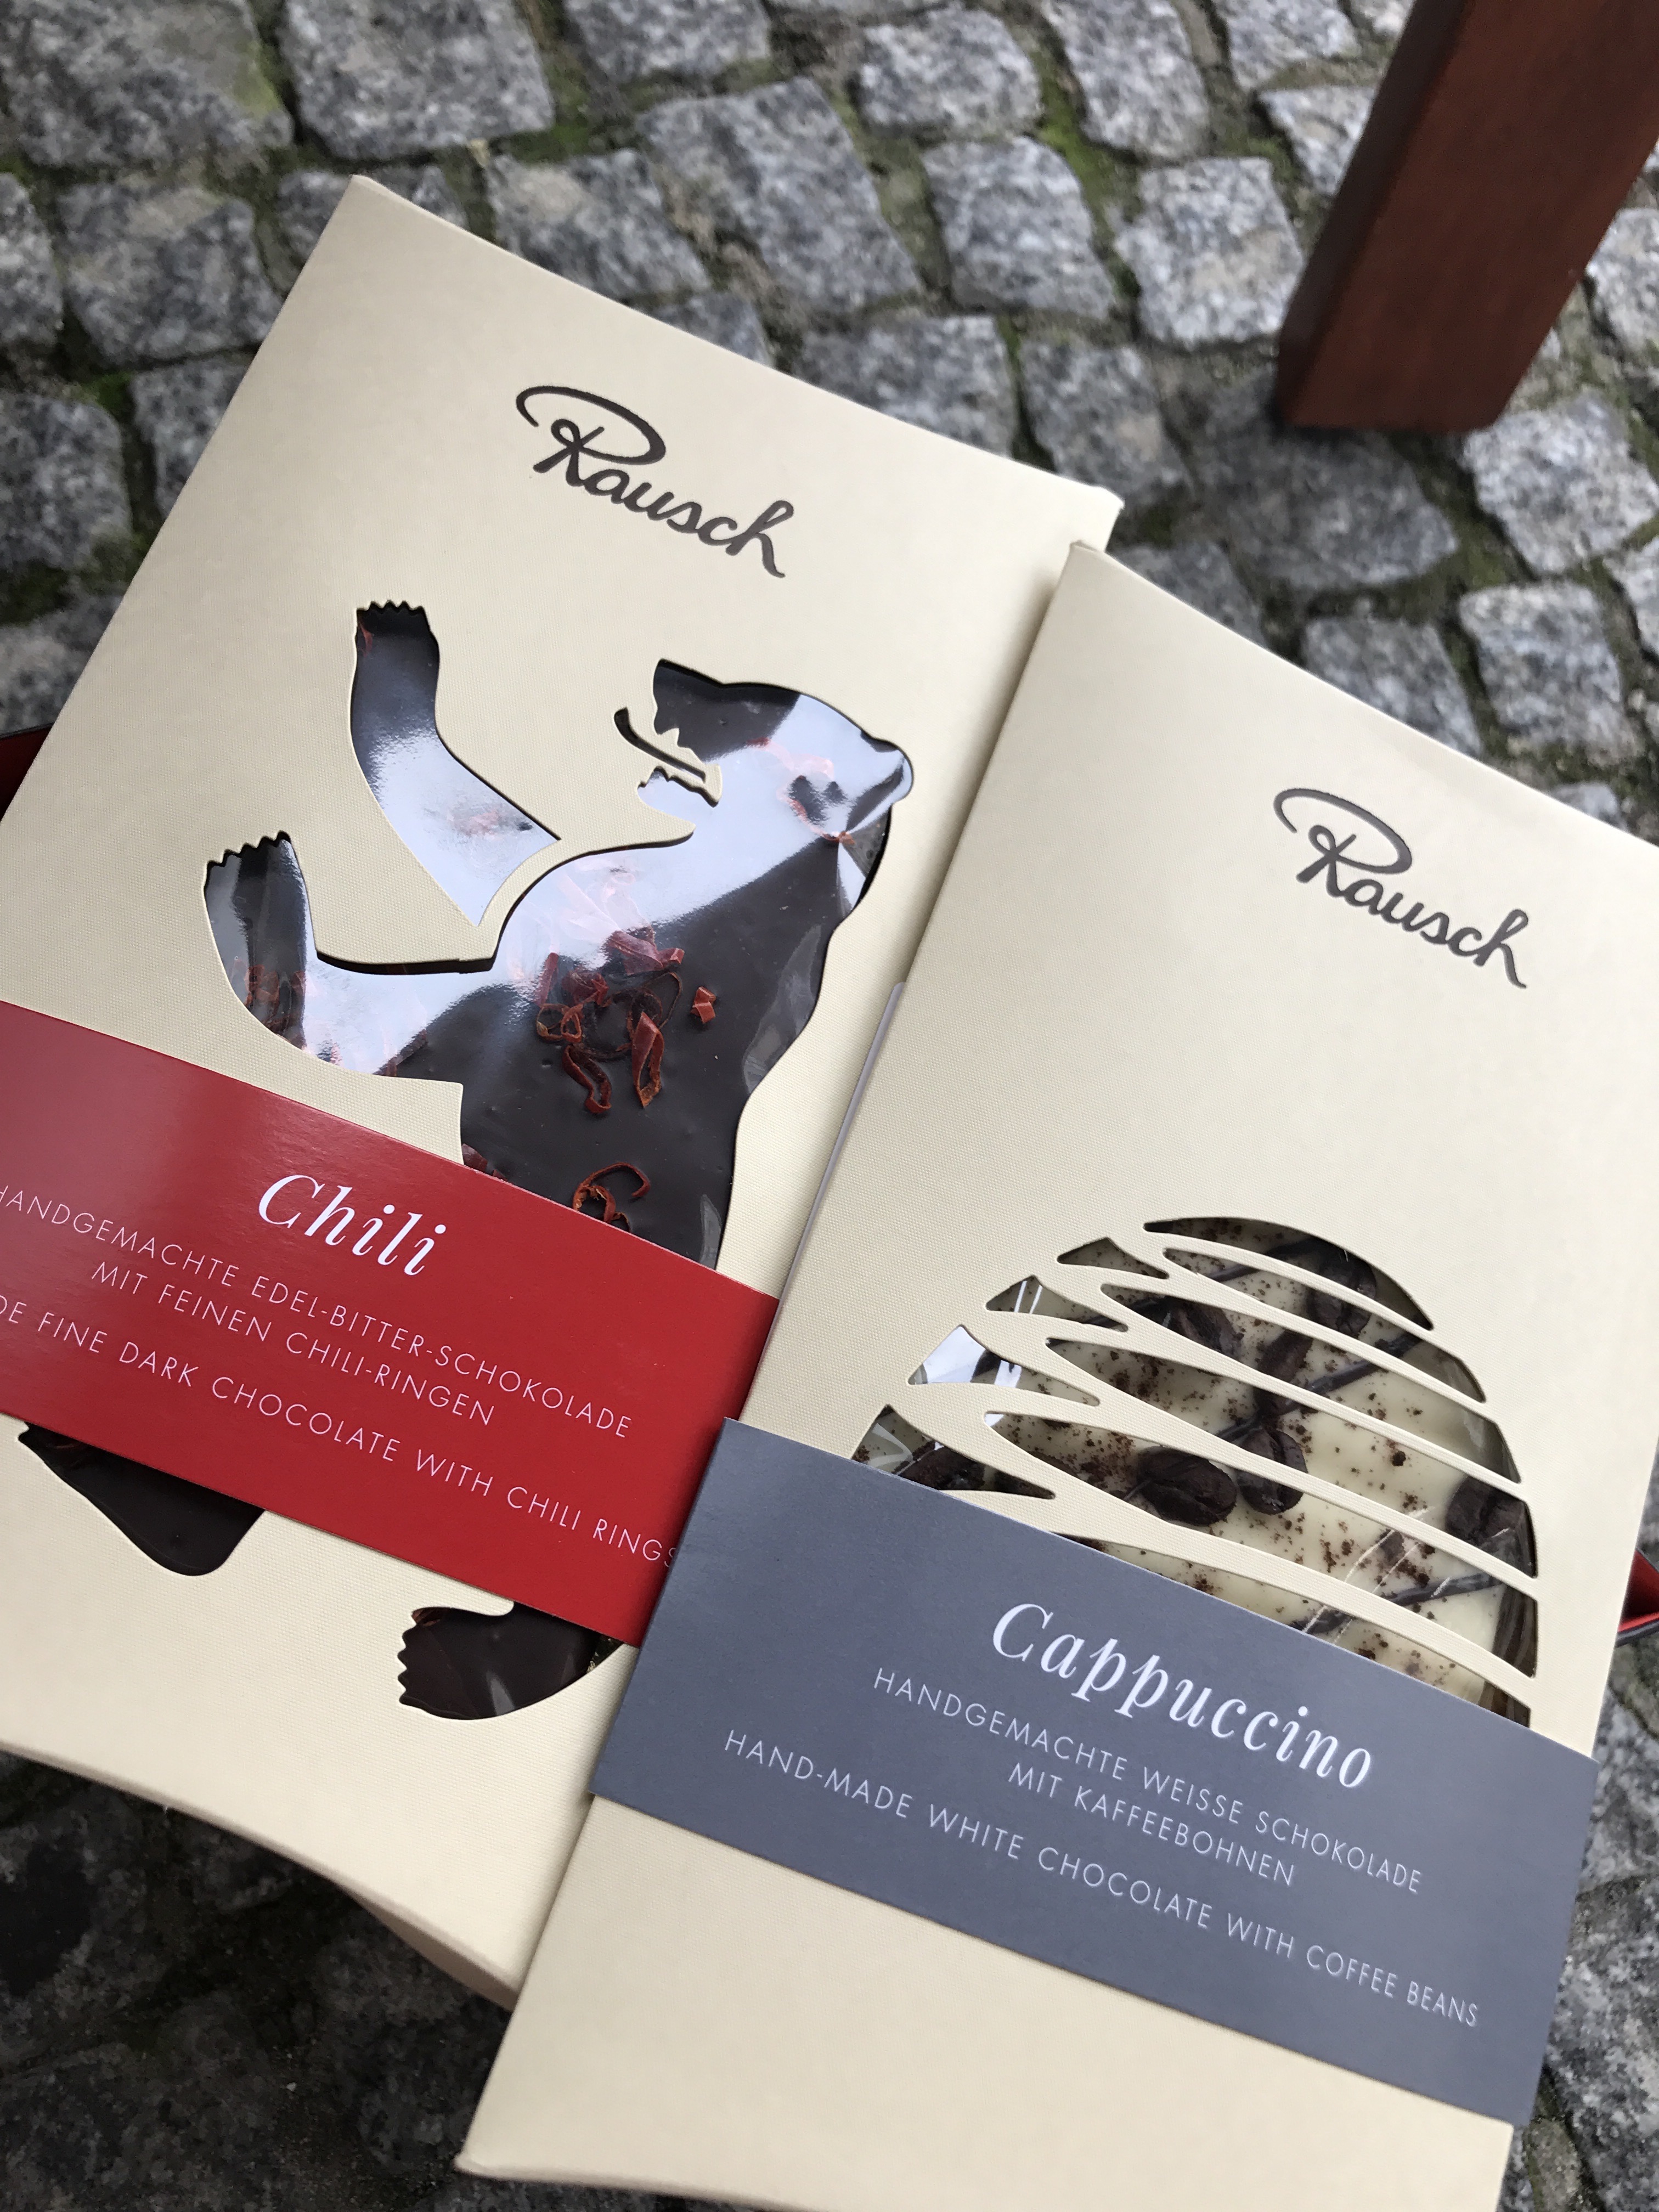 Some chocolate from Rausch Schokoladenhaus.